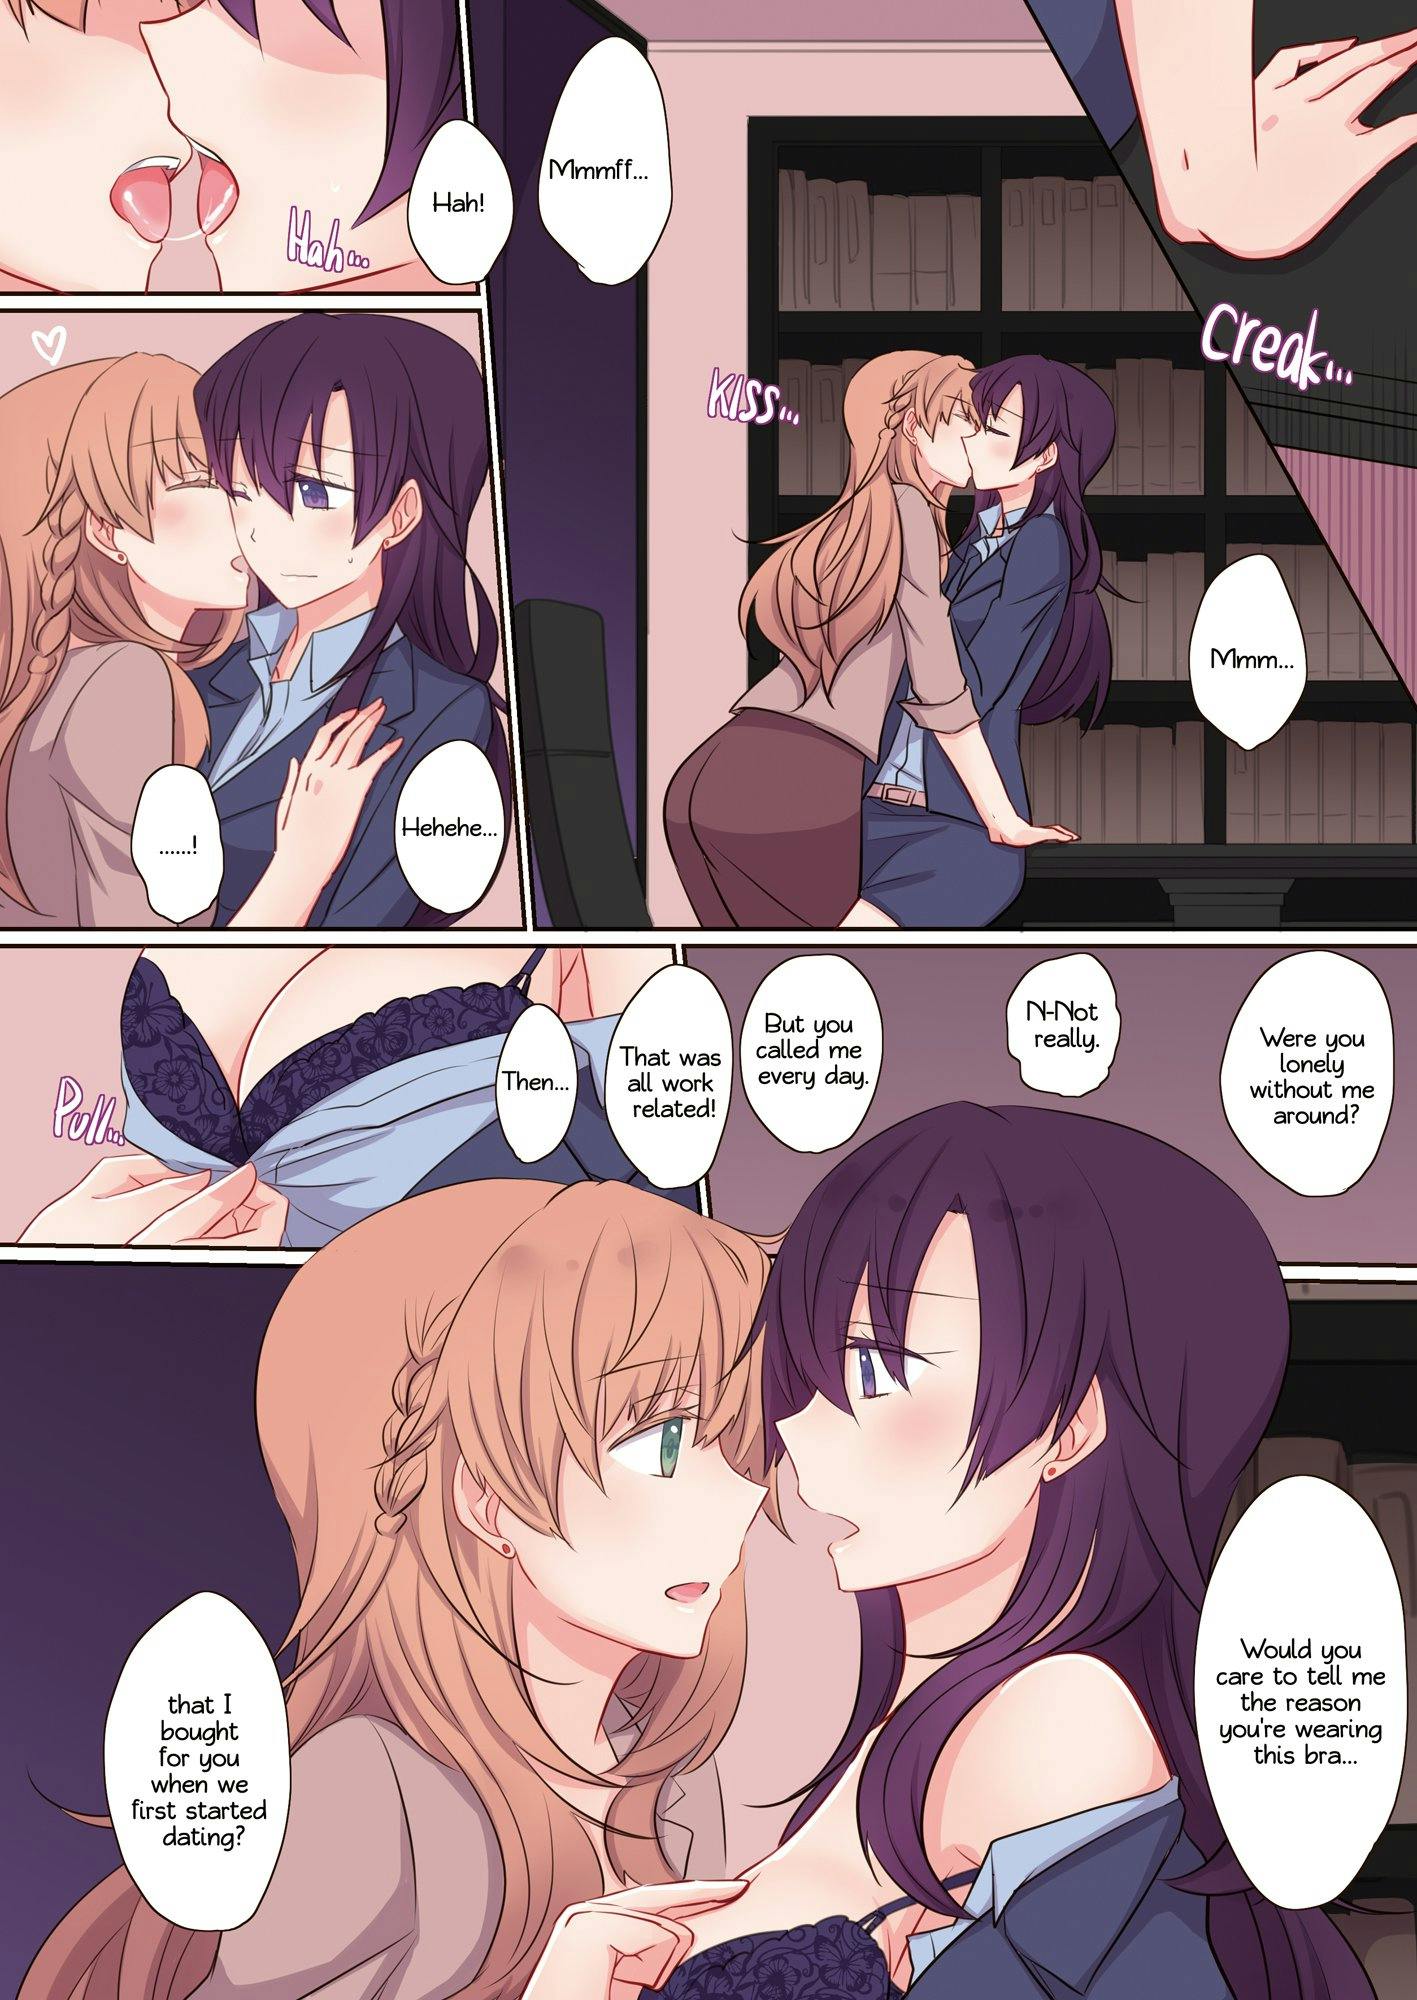 Anime Lesbian Hentai Manga - Lesbian Hentai: Best Yuri Hentai to Read and Stream Online